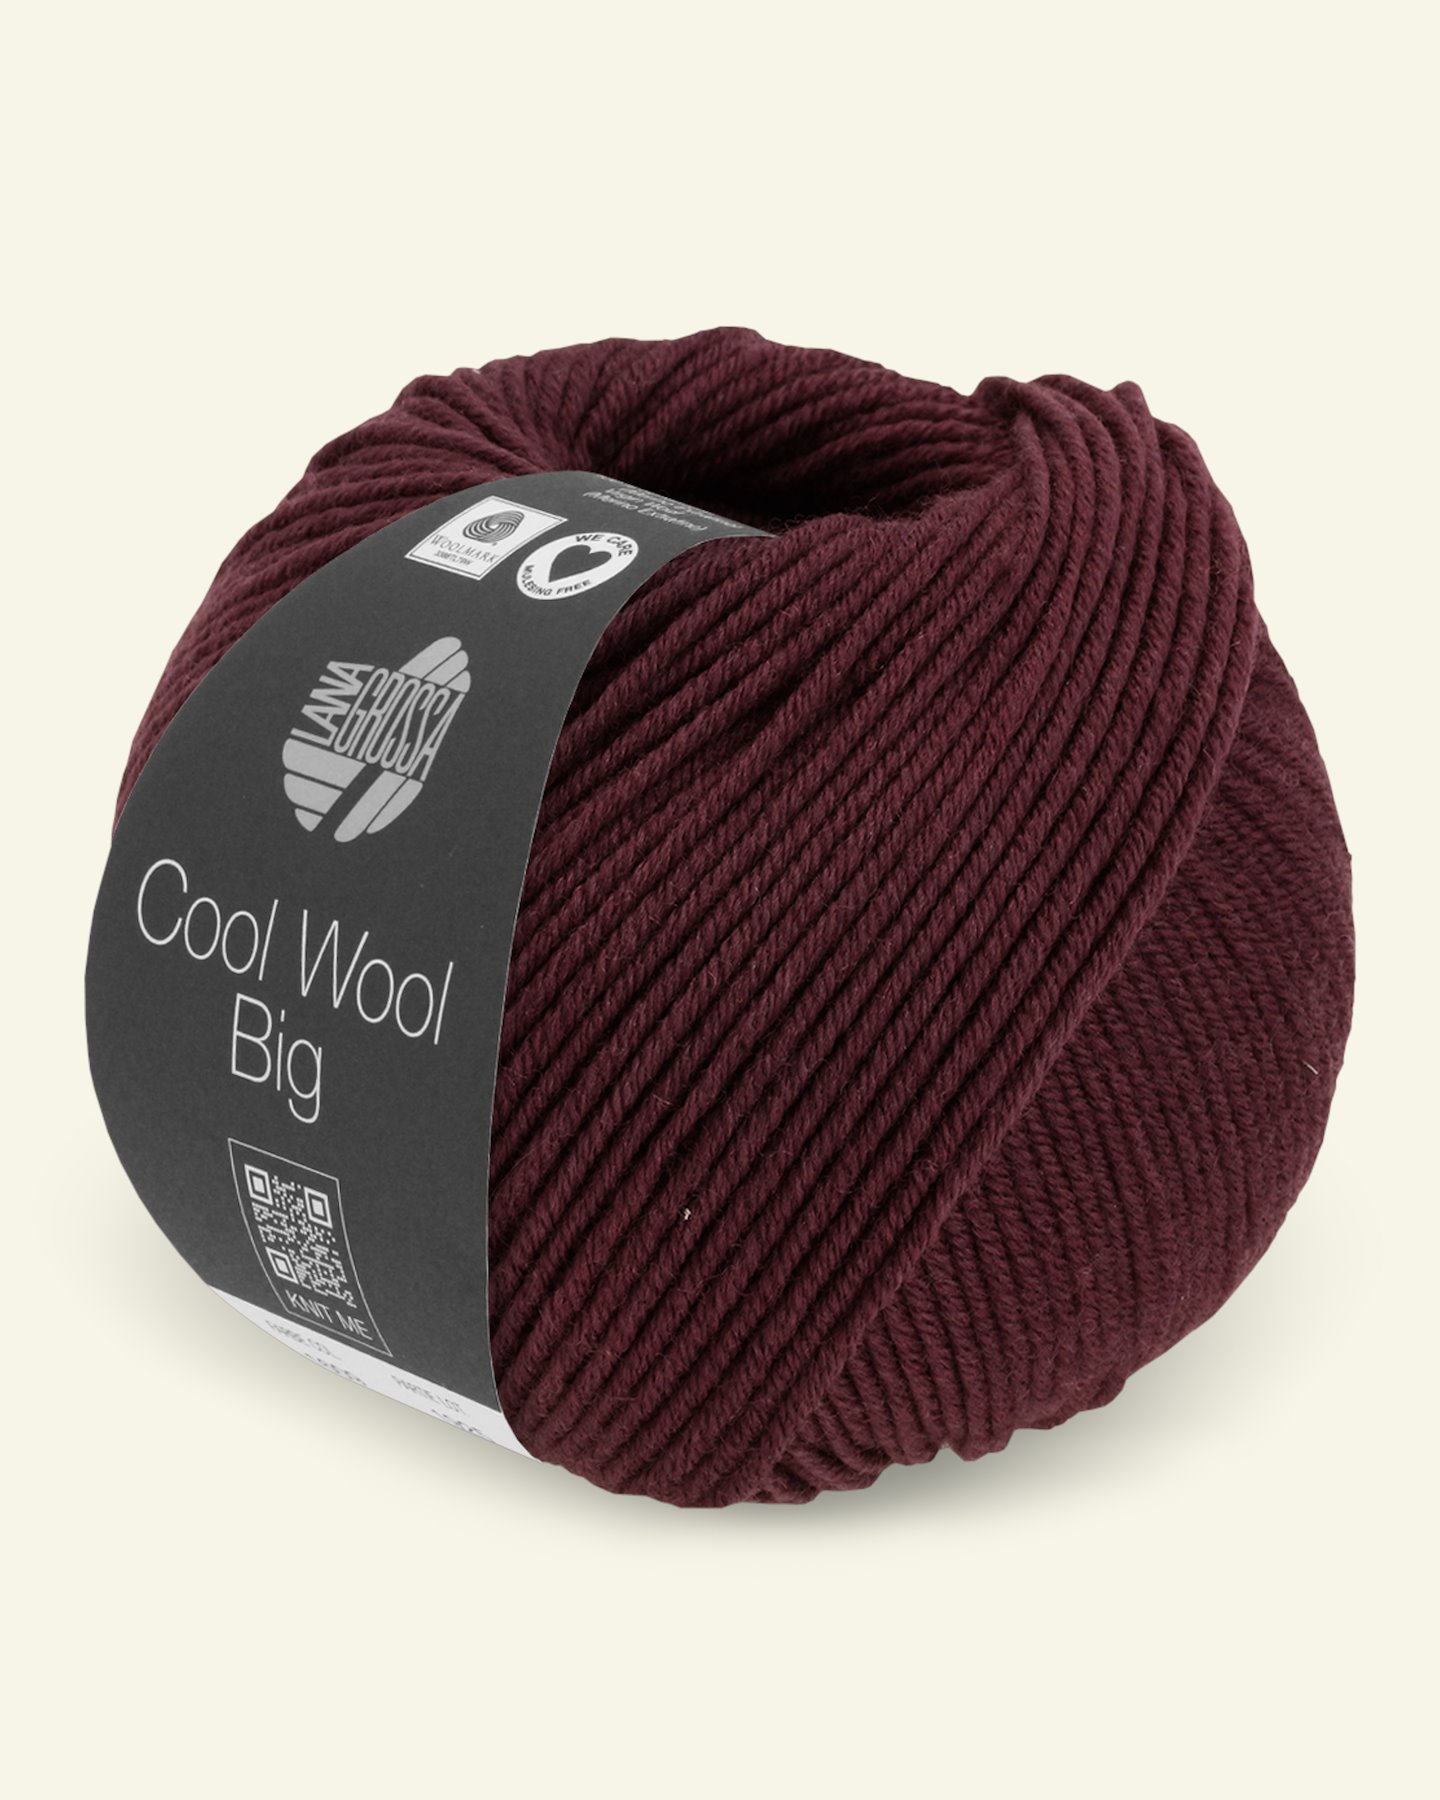 Lana Grossa, extrafine merino wool yarn "Cool Wool Big", bordeaux mel. 90001092_pack